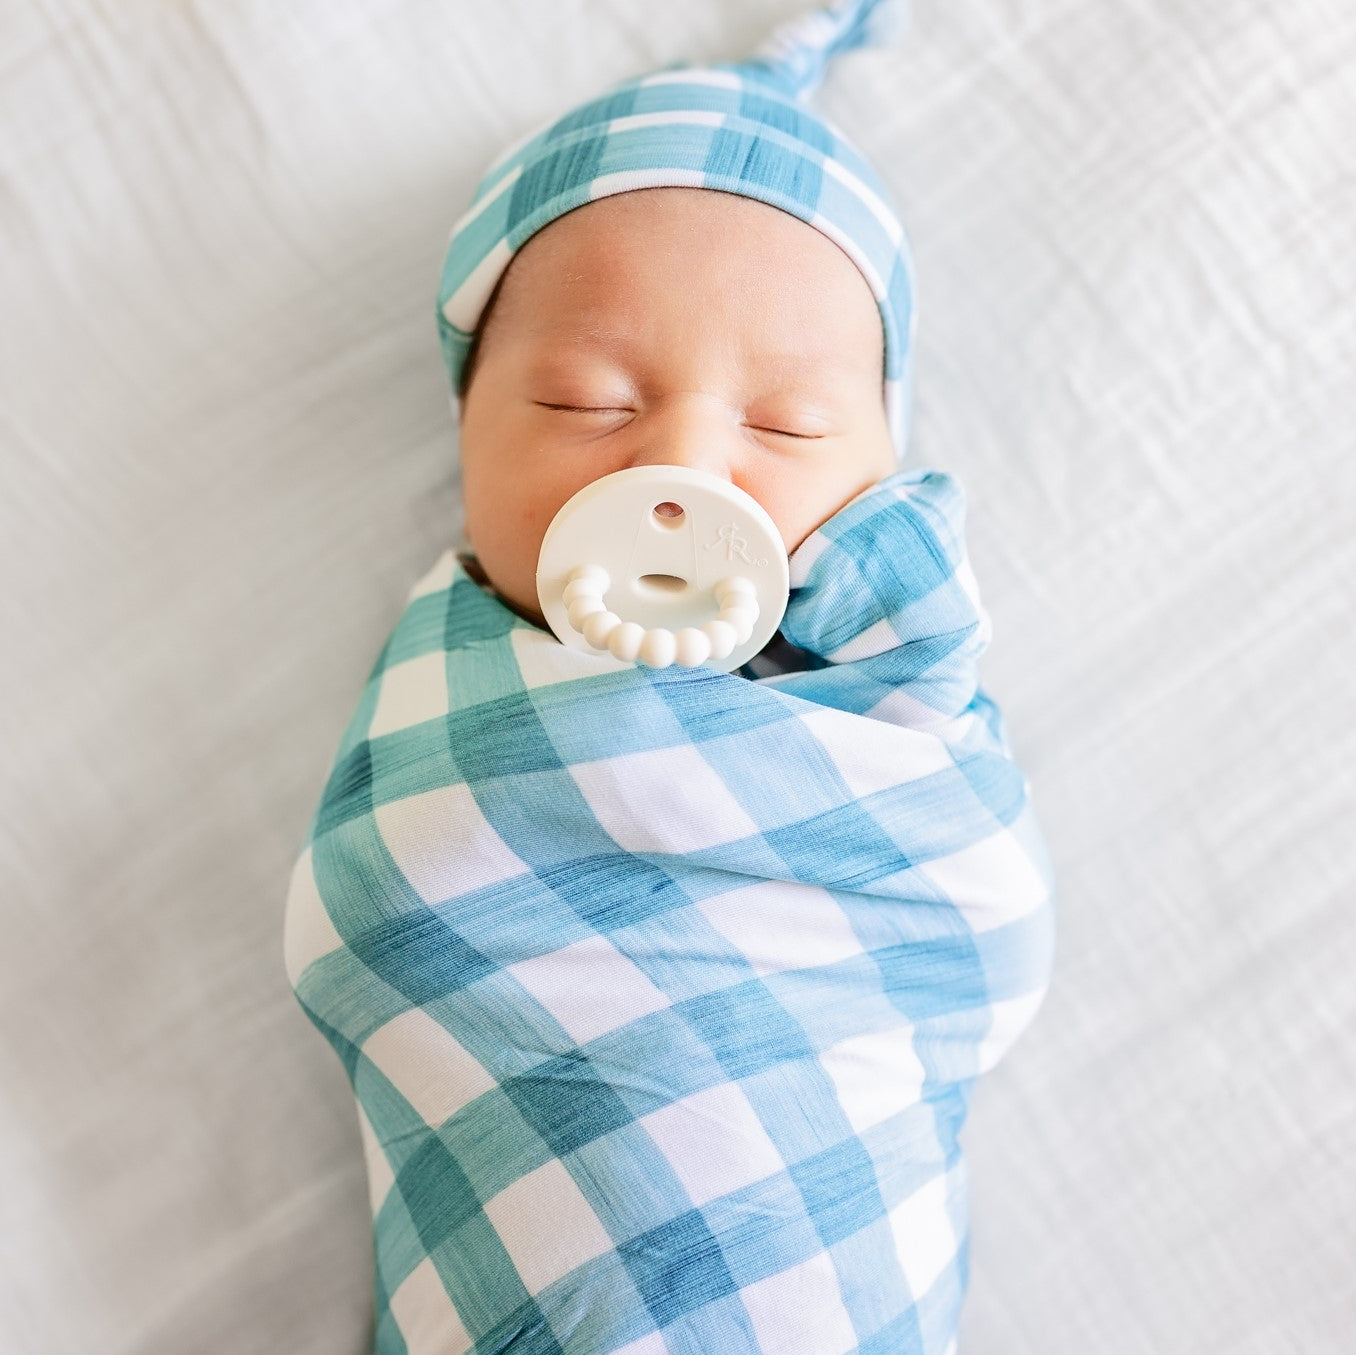 Baby using Ivory Cutie PAT Slant.